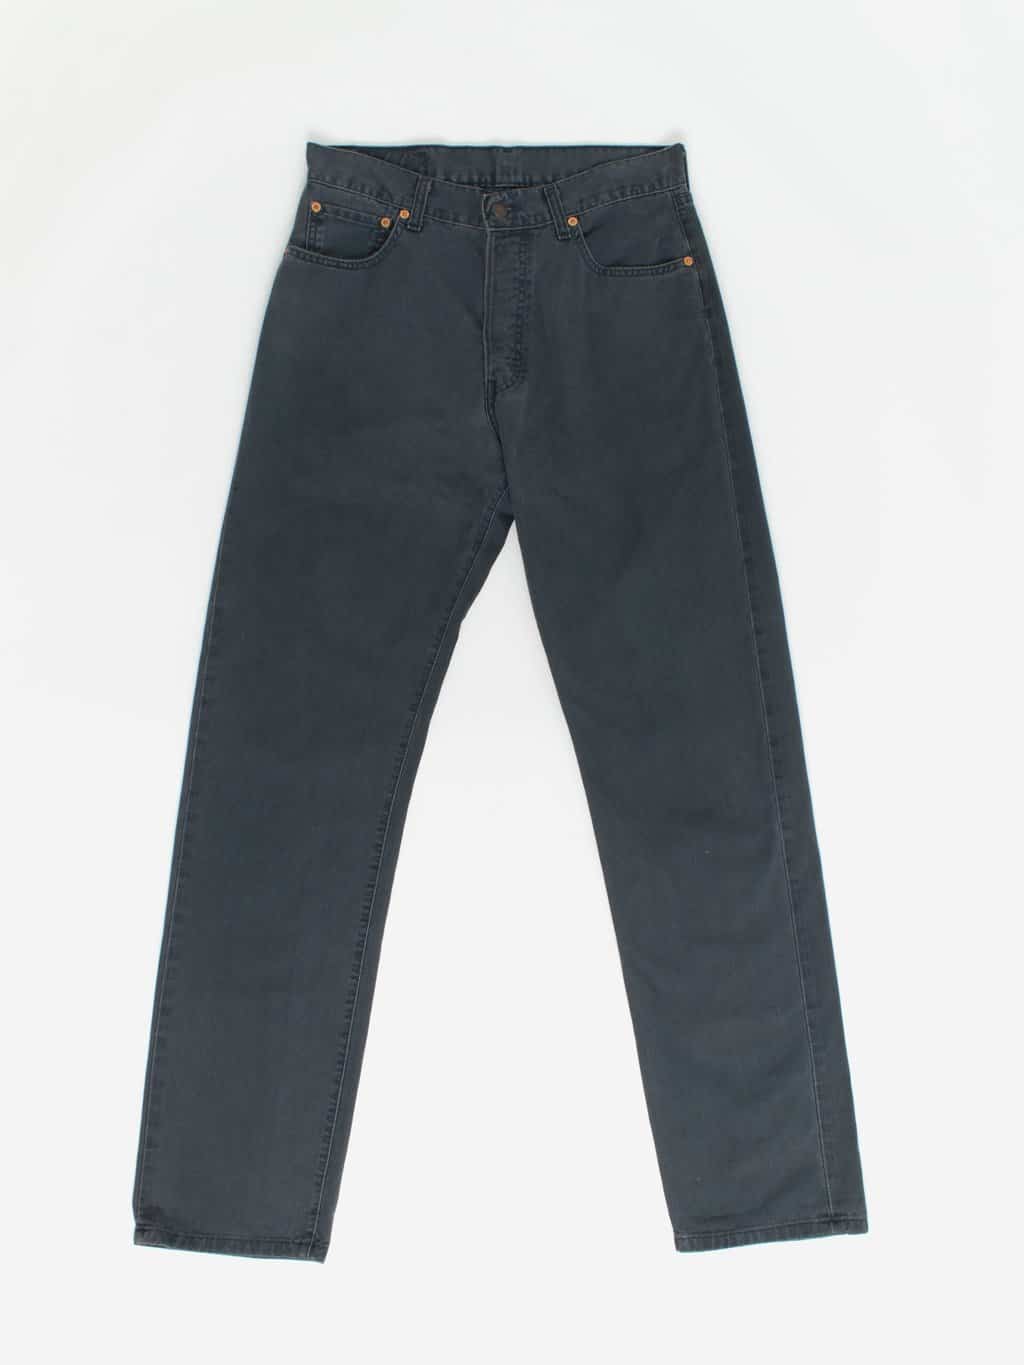 Vintage Levis 517 jeans 31 x 33 grey blue dark wash Italy made 90s - St ...